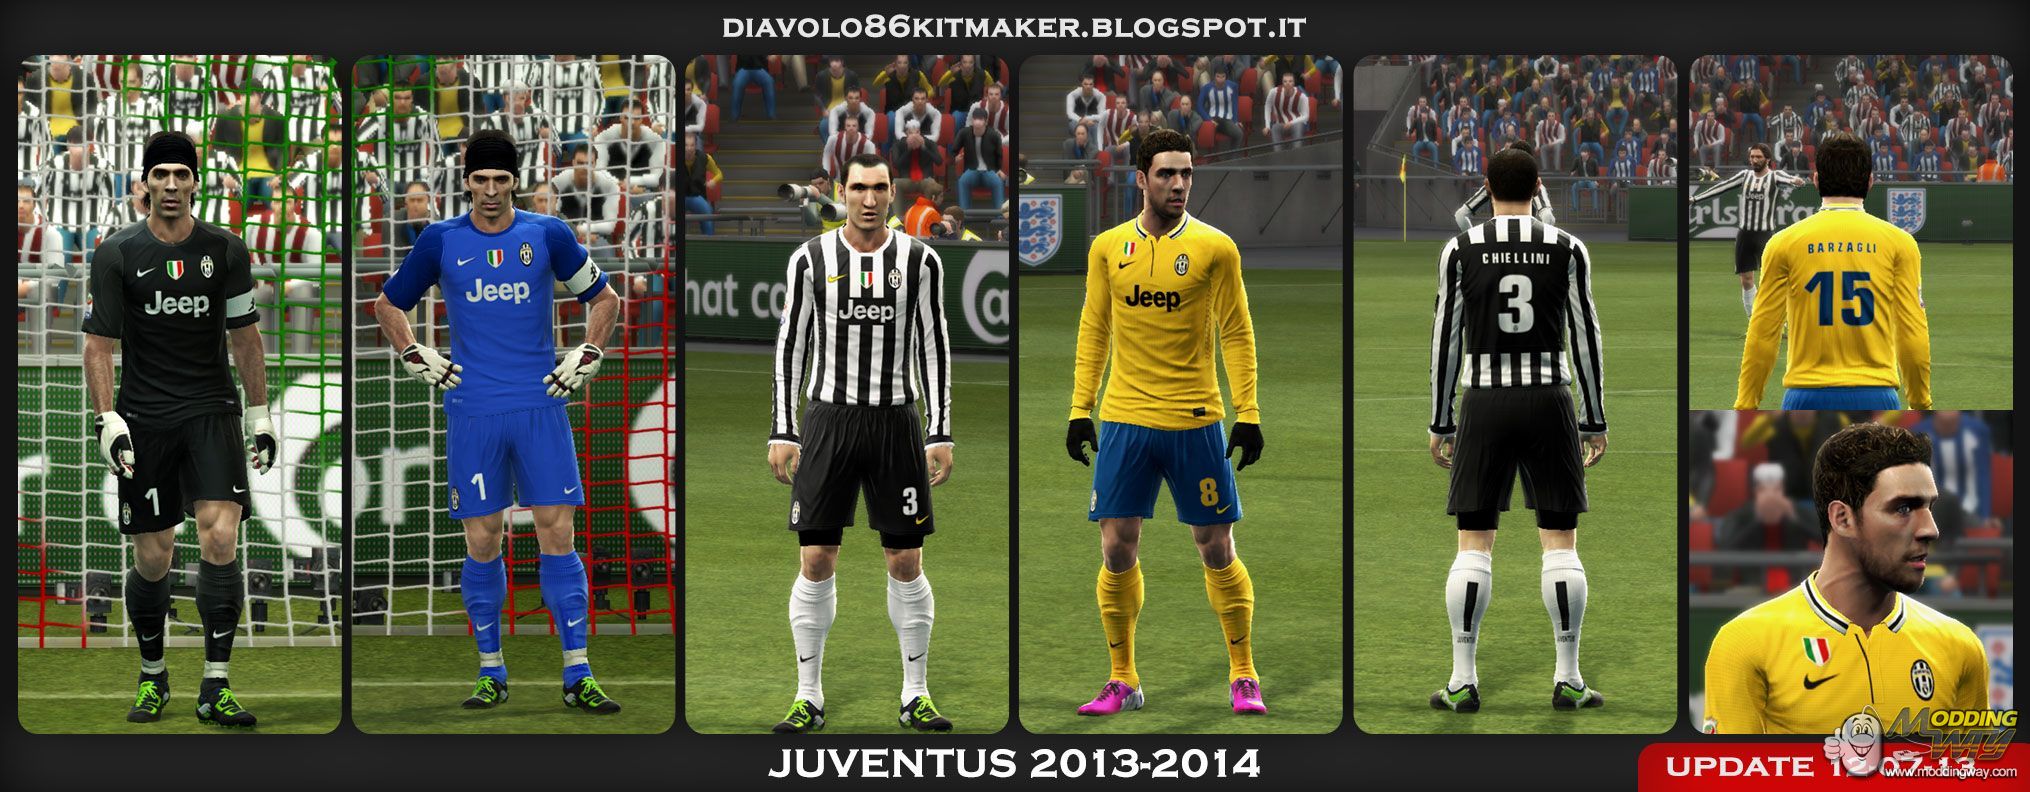 Juventus Gdb Kit 13 14 Update12 07 13 Pro Evolution Soccer